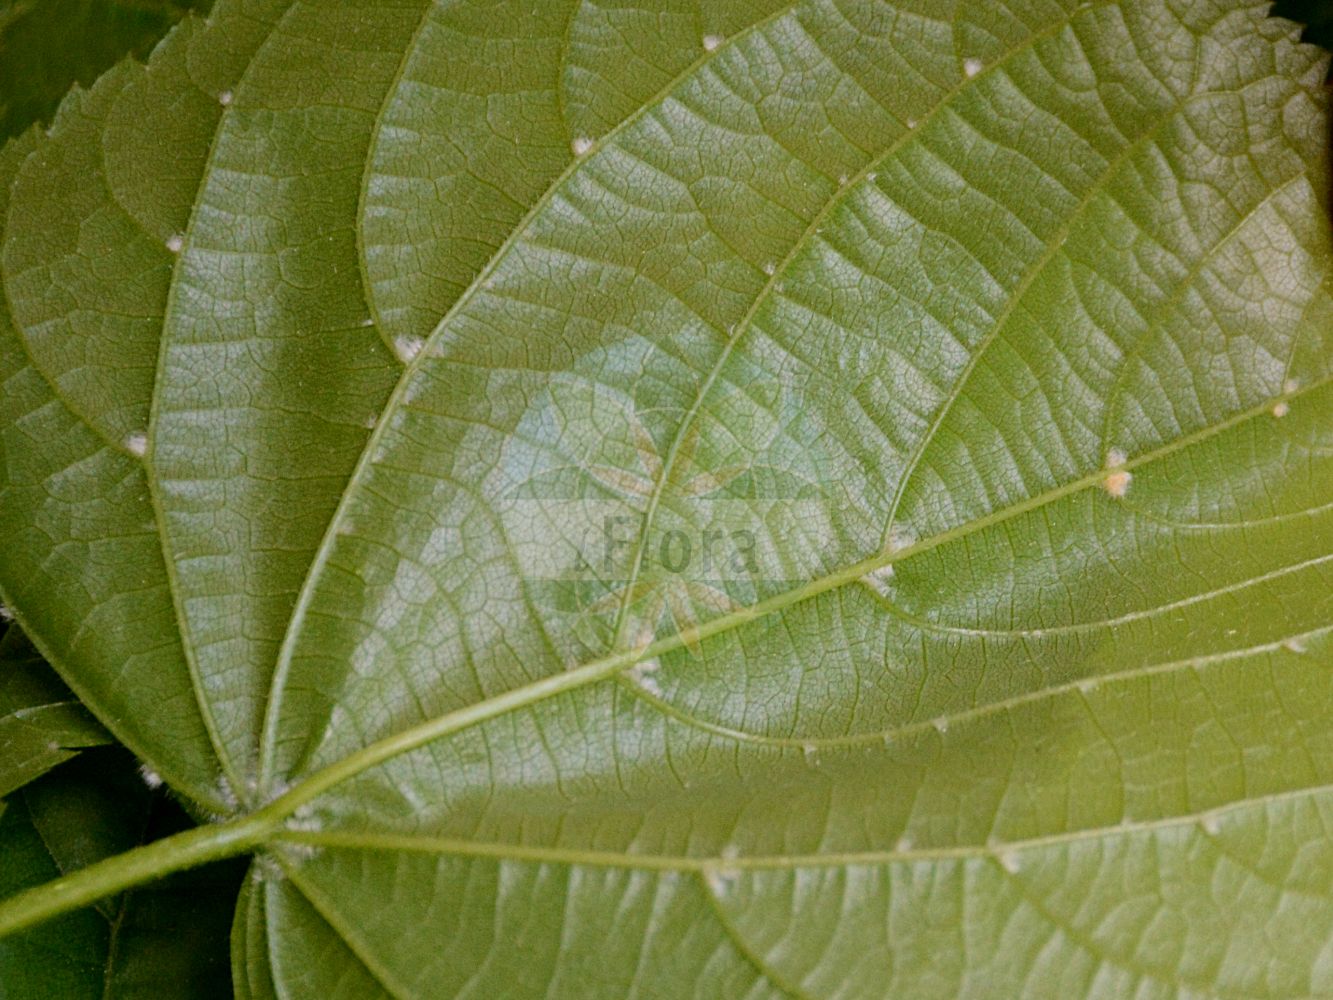 Foto von Tilia platyphyllos (Sommer-Linde - Large-leaved Lime). ---- Photo of Tilia platyphyllos (Sommer-Linde - Large-leaved Lime).(Tilia platyphyllos,Sommer-Linde,Large-leaved Lime,Tilia braunii,Tilia cordifolia,Tilia corylifolia,Tilia flava,Tilia grandifolia,Tilia platyphyllos,Tilia praecox,Tilia pyramidalis,Tilia rubra,Tilia sitnensis,Sommer-Linde,Frueh-Linde,Gewoehnliche Sommer-Linde,Large-leaved Lime,Broad-leaved Lime,Largeleaf Linden,Large-leaved Linden,Tilia,Linde,Lime,Malvaceae,Malvengewächse,Mallow family)